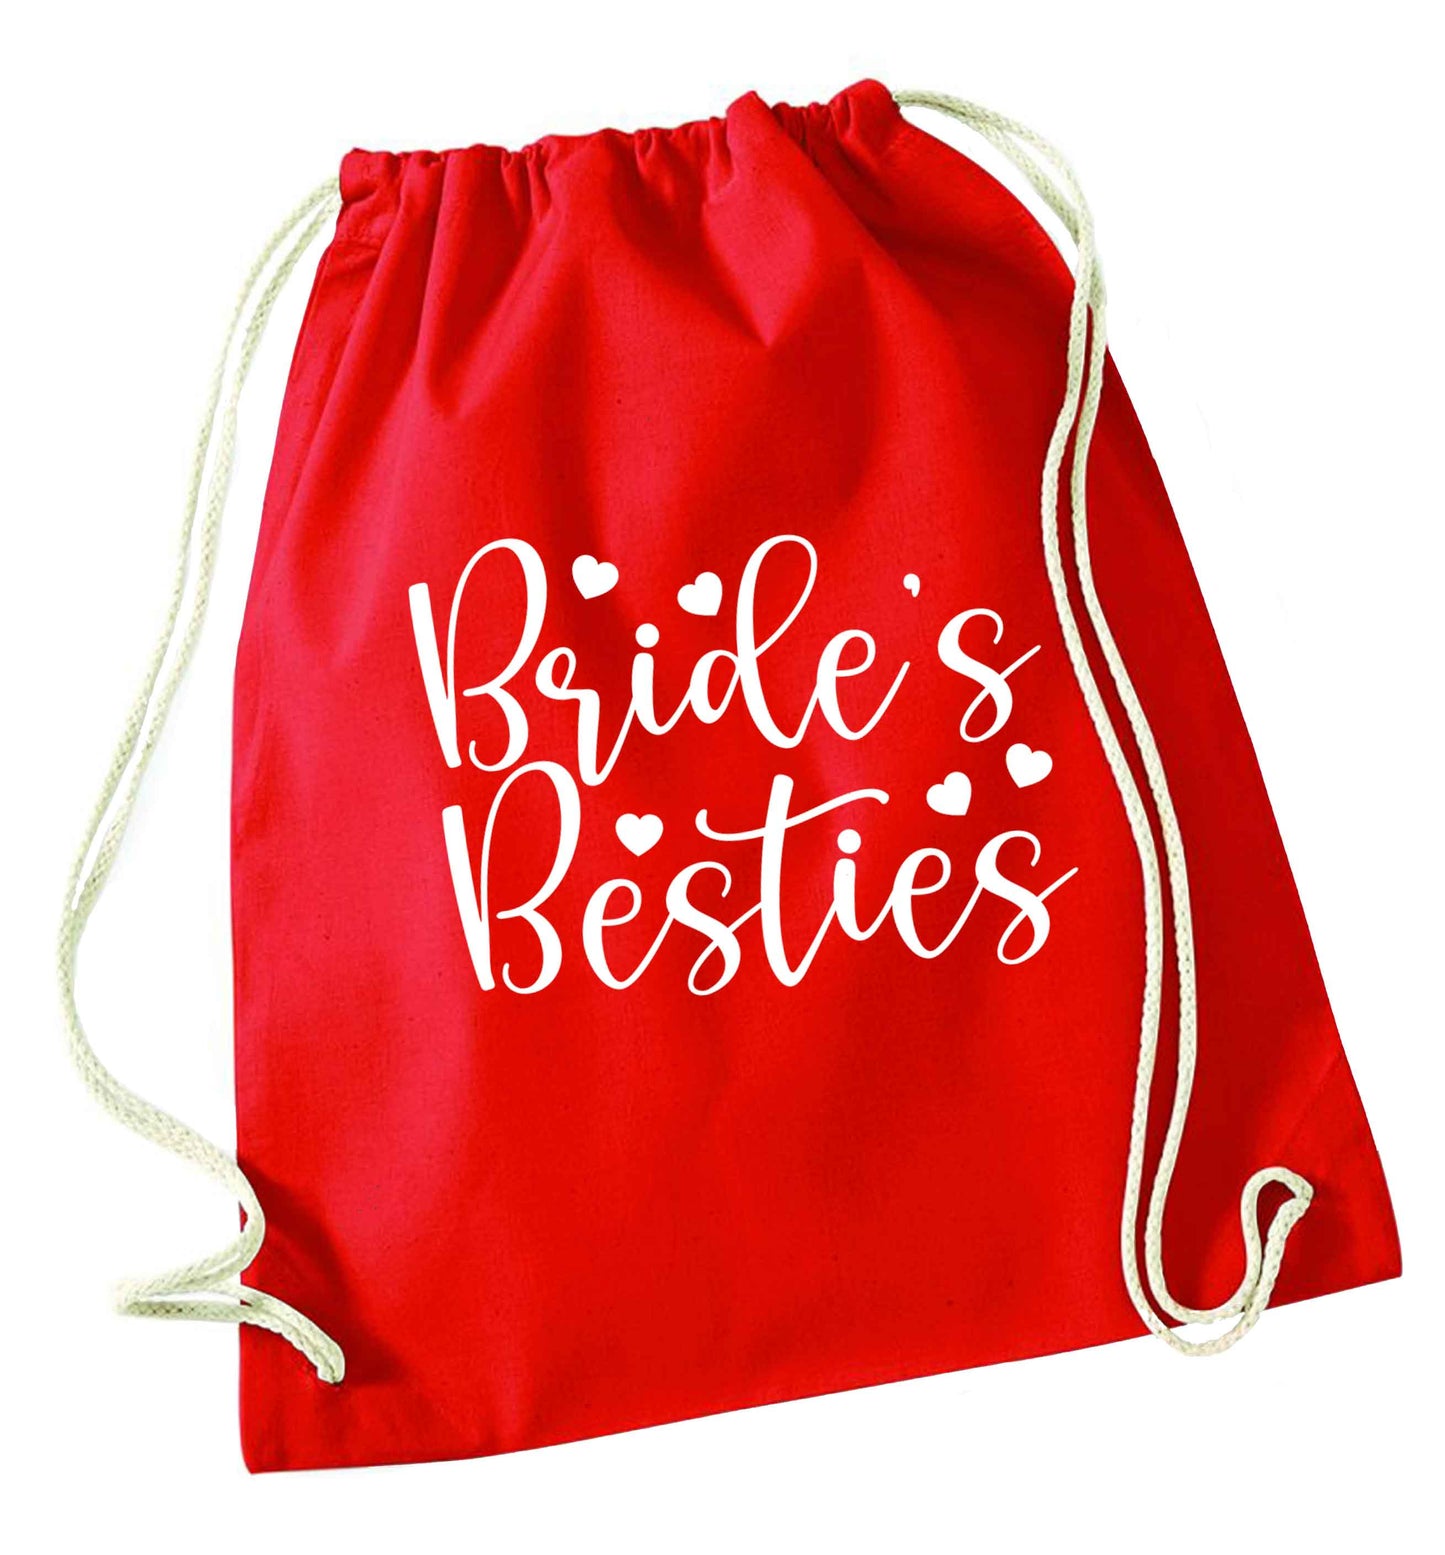 Brides besties red drawstring bag 